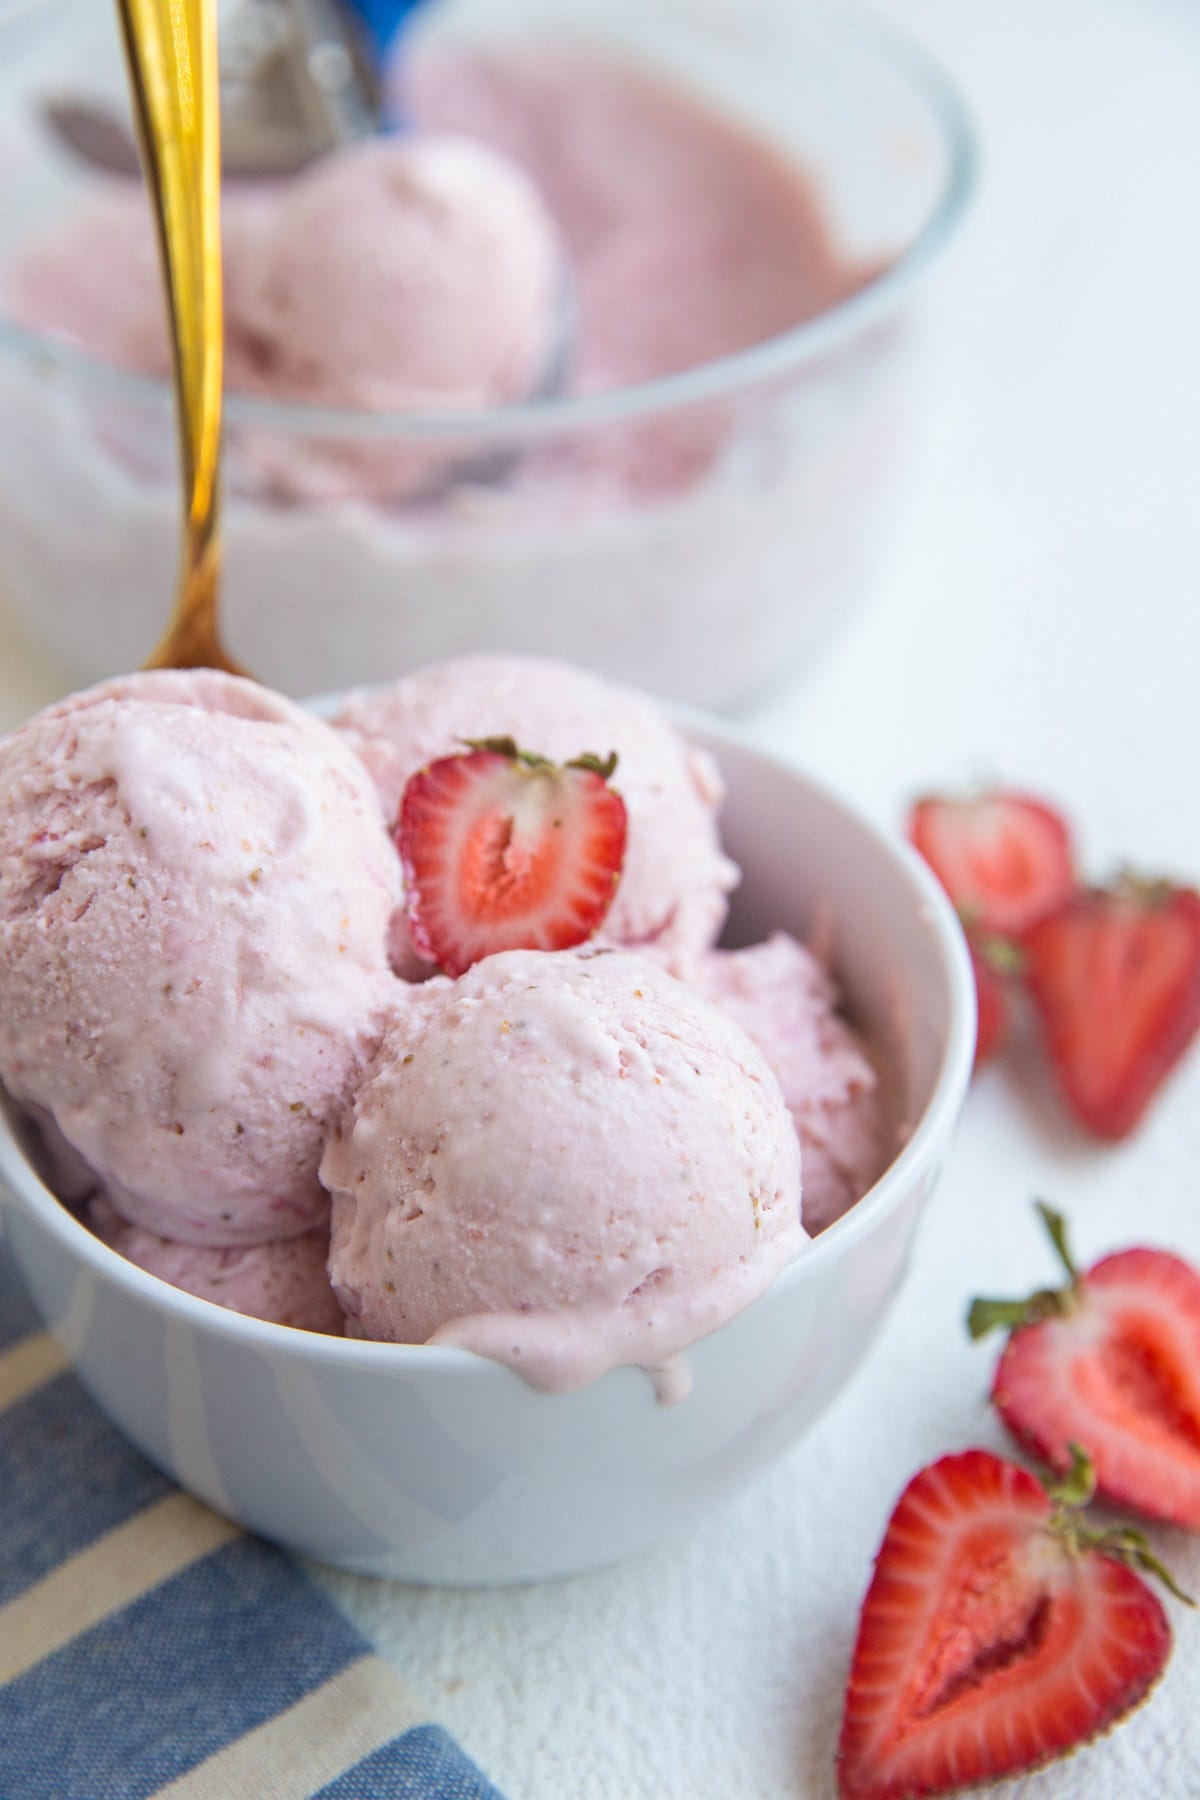 Homemade Strawberry Ice Cream ~ No Ice Cream Maker Needed! - The Salted  Pepper